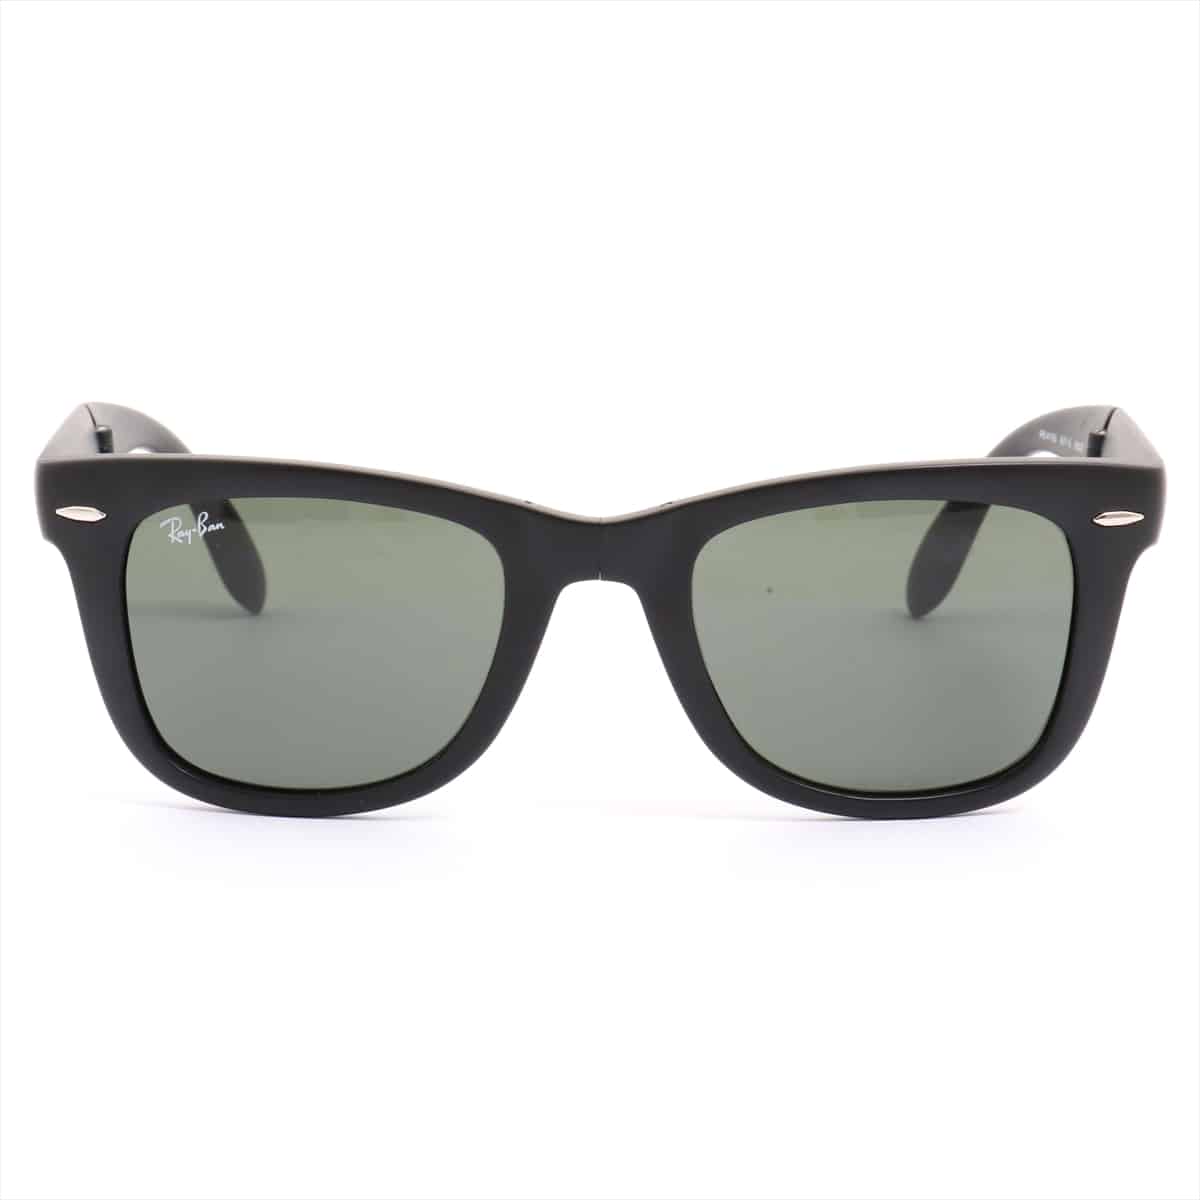 Ray-Ban RB4105 folding Wayfarer Sunglasses Plastic Black